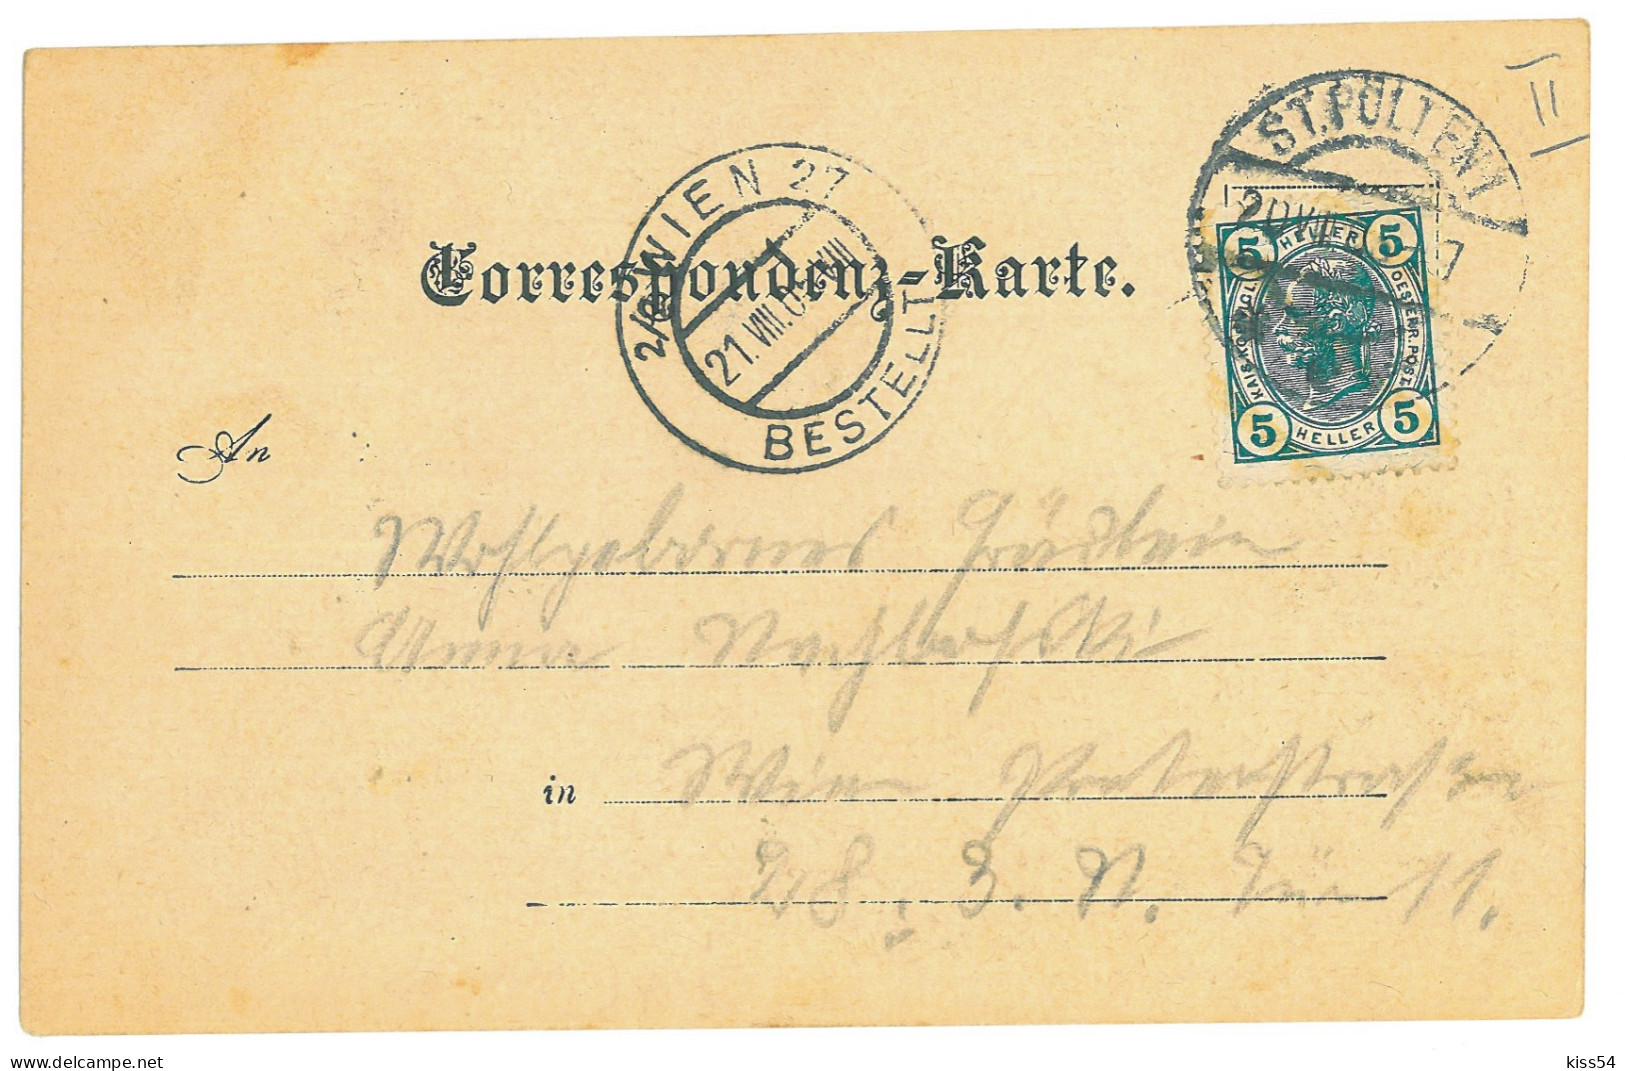 AUS 4 - 17258 ST. POLTEN, Litho, Austria - Old Postcard - Used - 1905 - St. Pölten